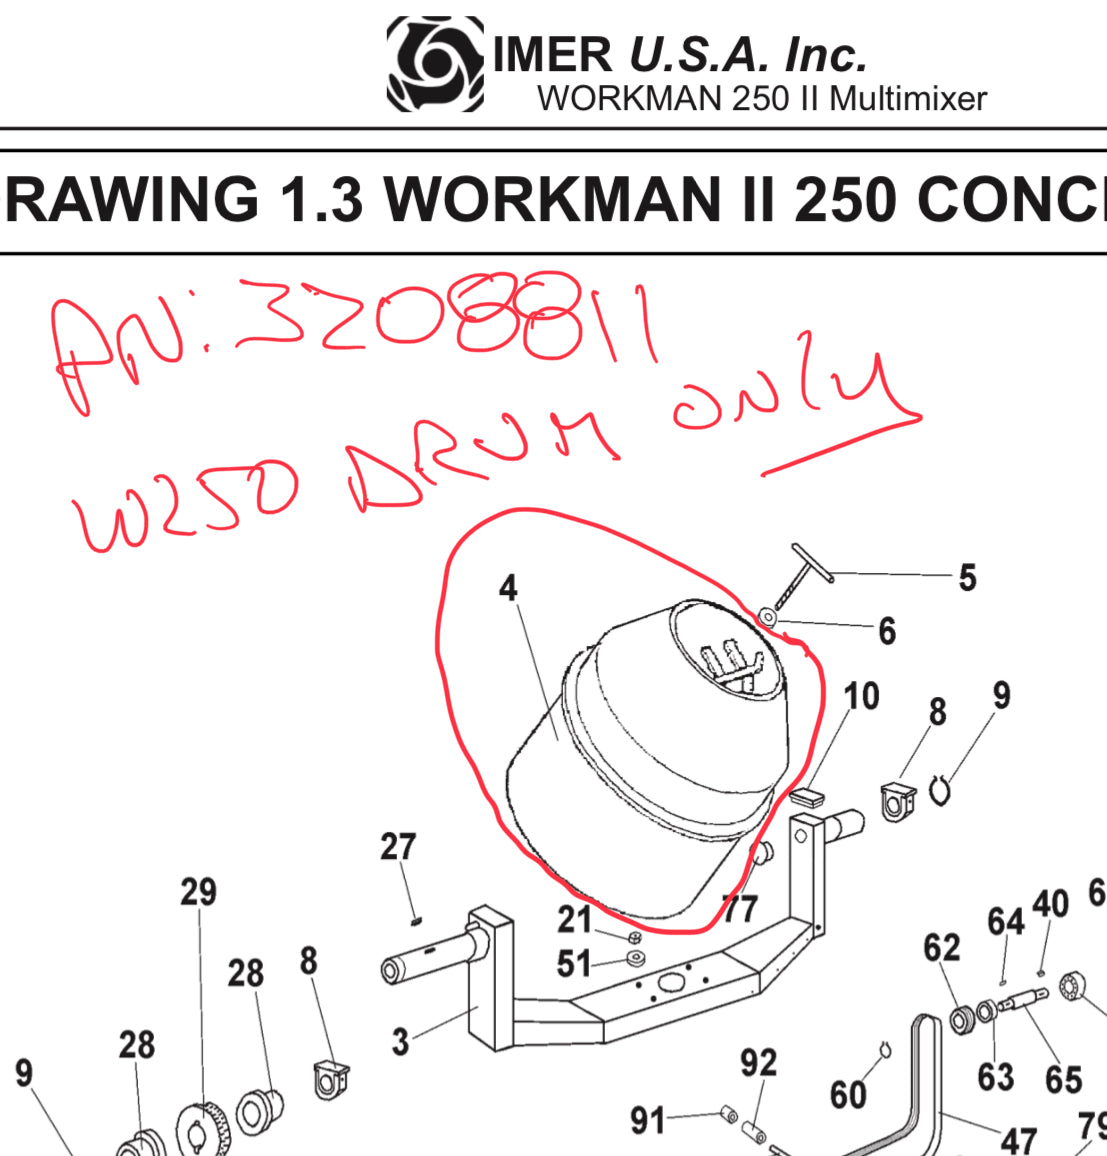 PN 3208811 - Drum Only - IMER Workman 250 Mixer